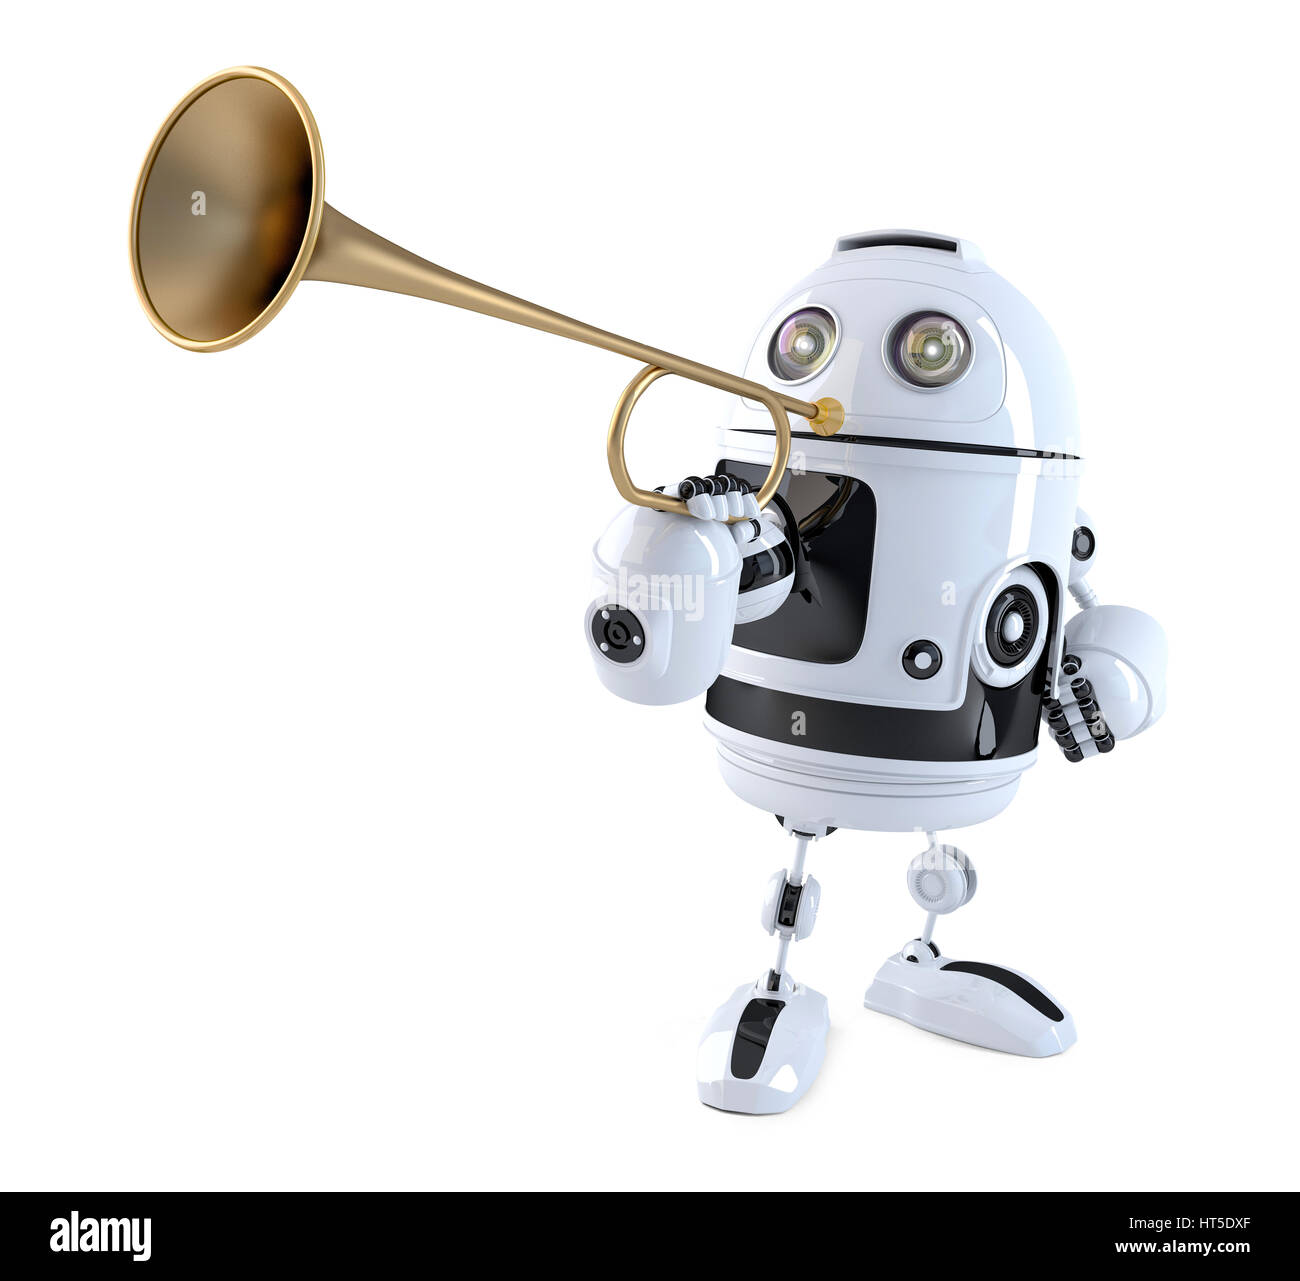 Roboter-Trompeter. Technologie-Konzept. 3D Illustration. Clipping-Pfad enthält. Stockfoto